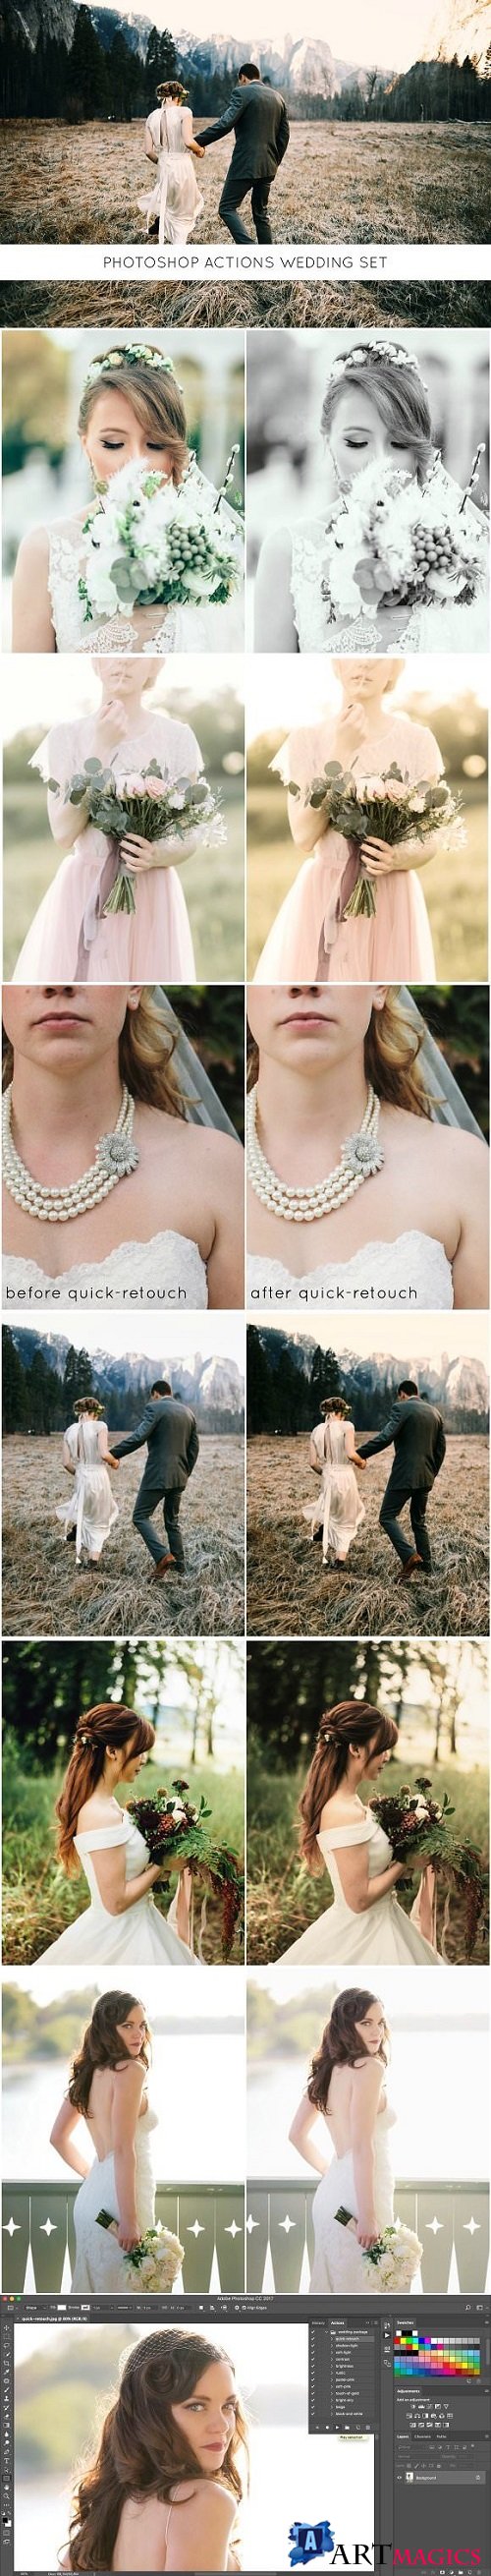 Photoshop actions wedding set 2218768